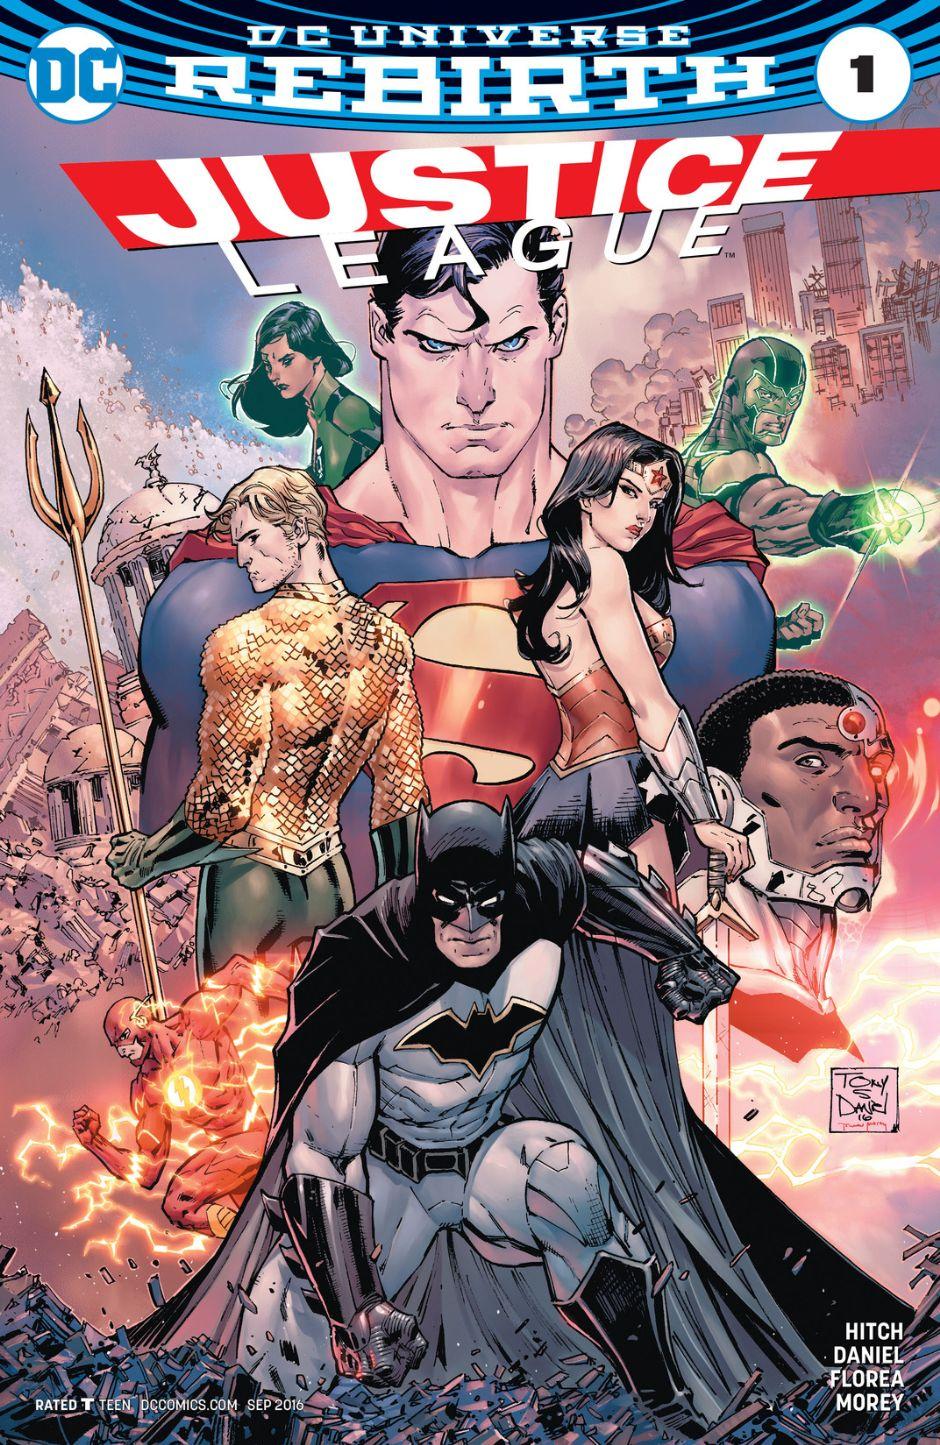 Justice League Vol. 3 #1